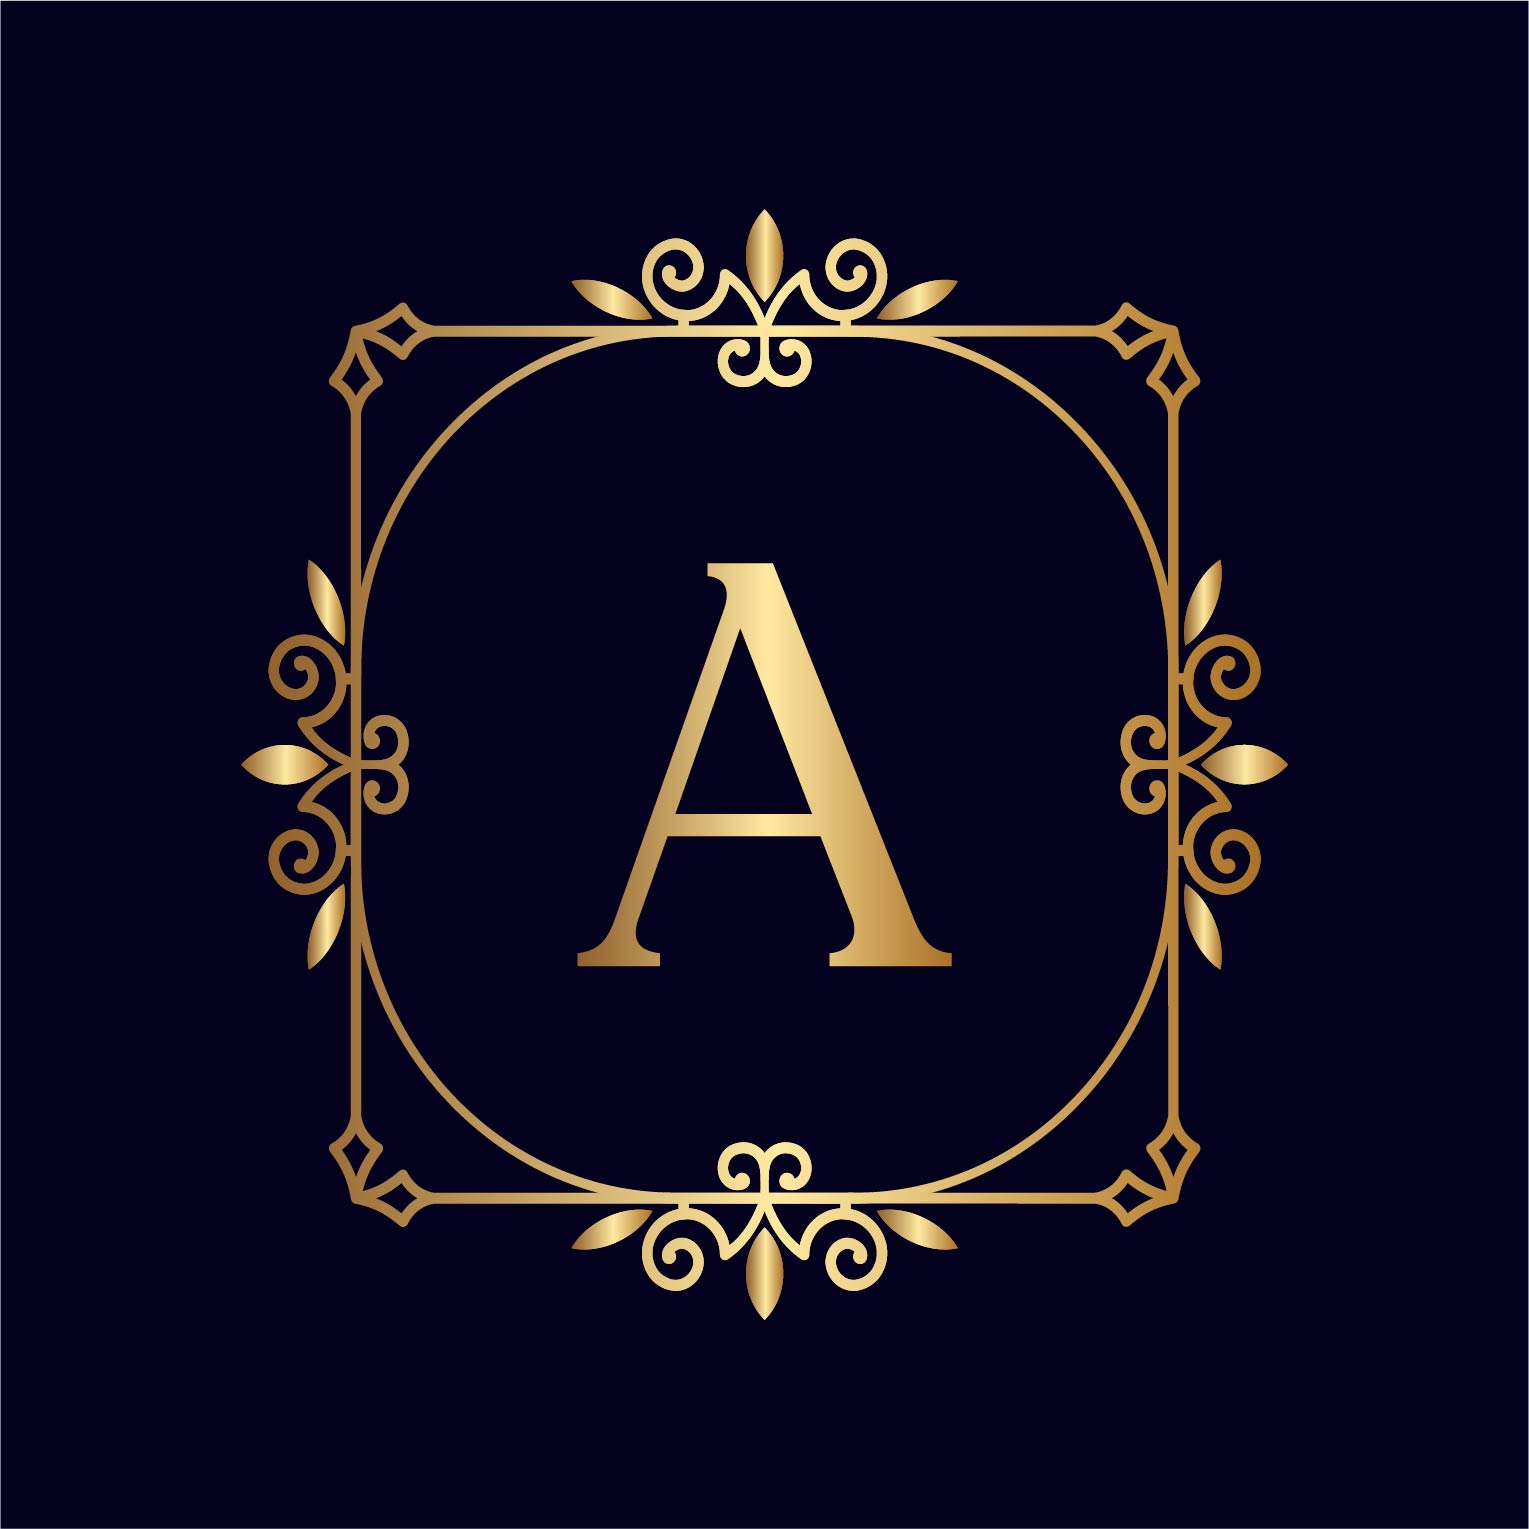 Artistic Gold Letter Logos Design cover image.